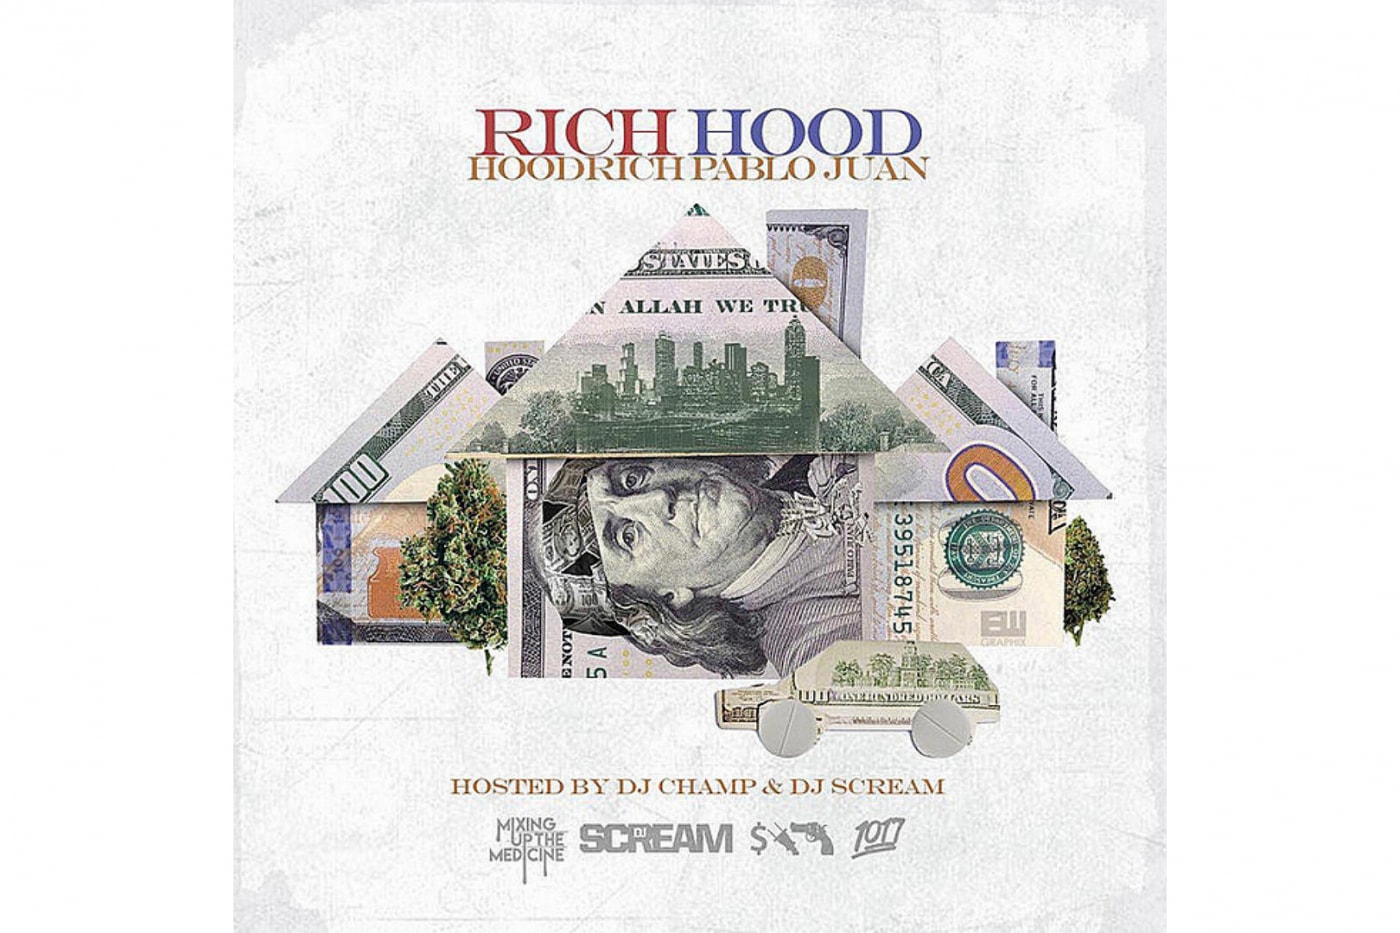 Hoodrich Pablo Juan Rich Hood Mixtape Gunna Lil Yachty Lil Baby Key Glock Lil Duke tape atlanta Stream Music Live Tracklist